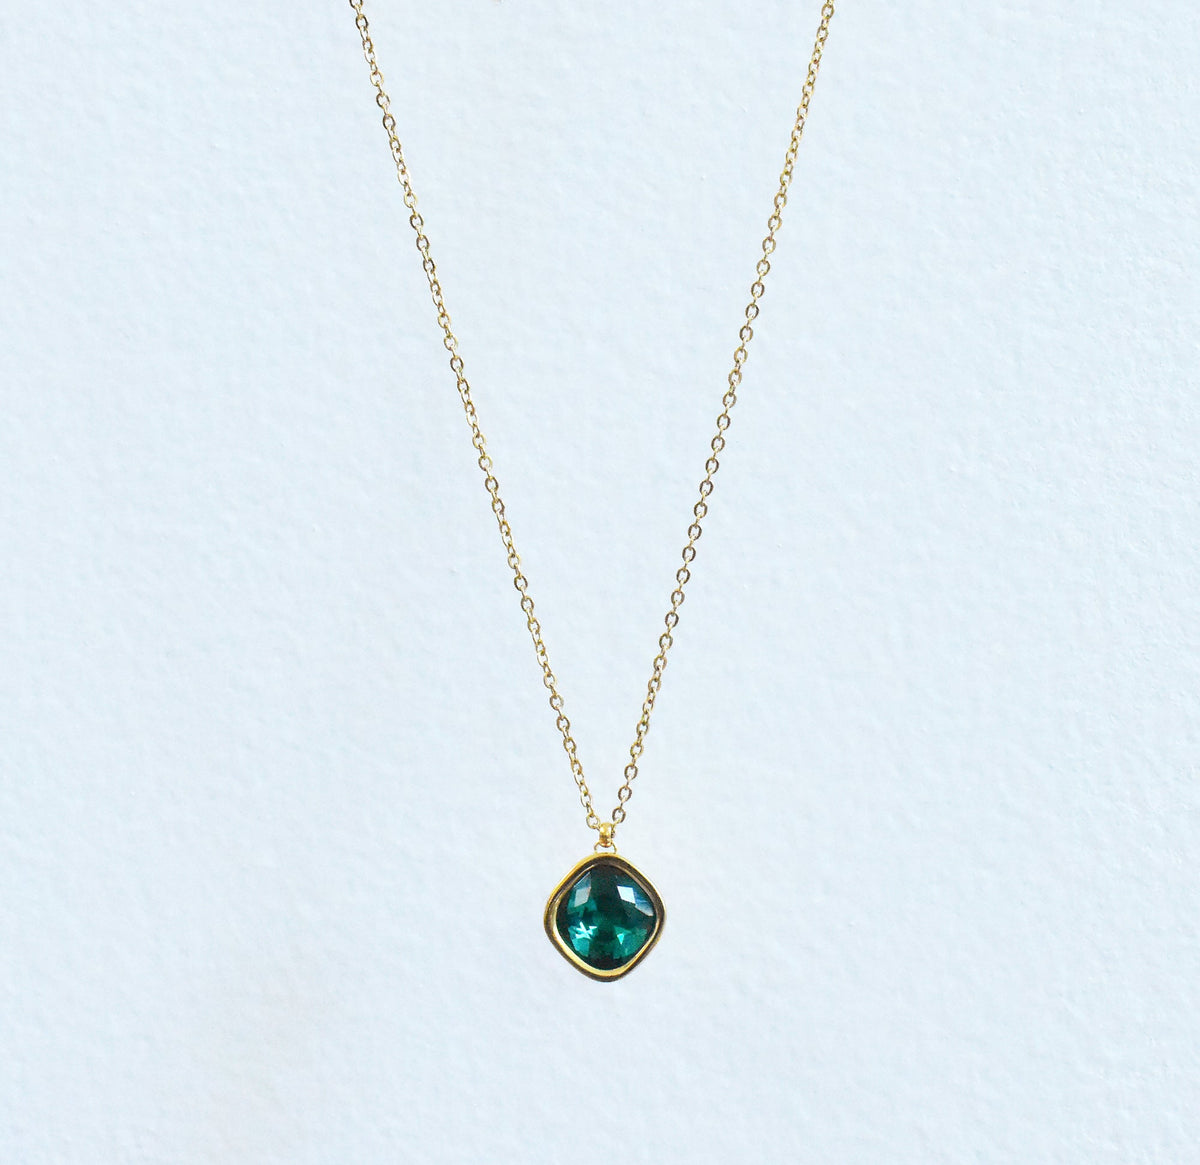 emerald pendant necklace waterproof jewelry